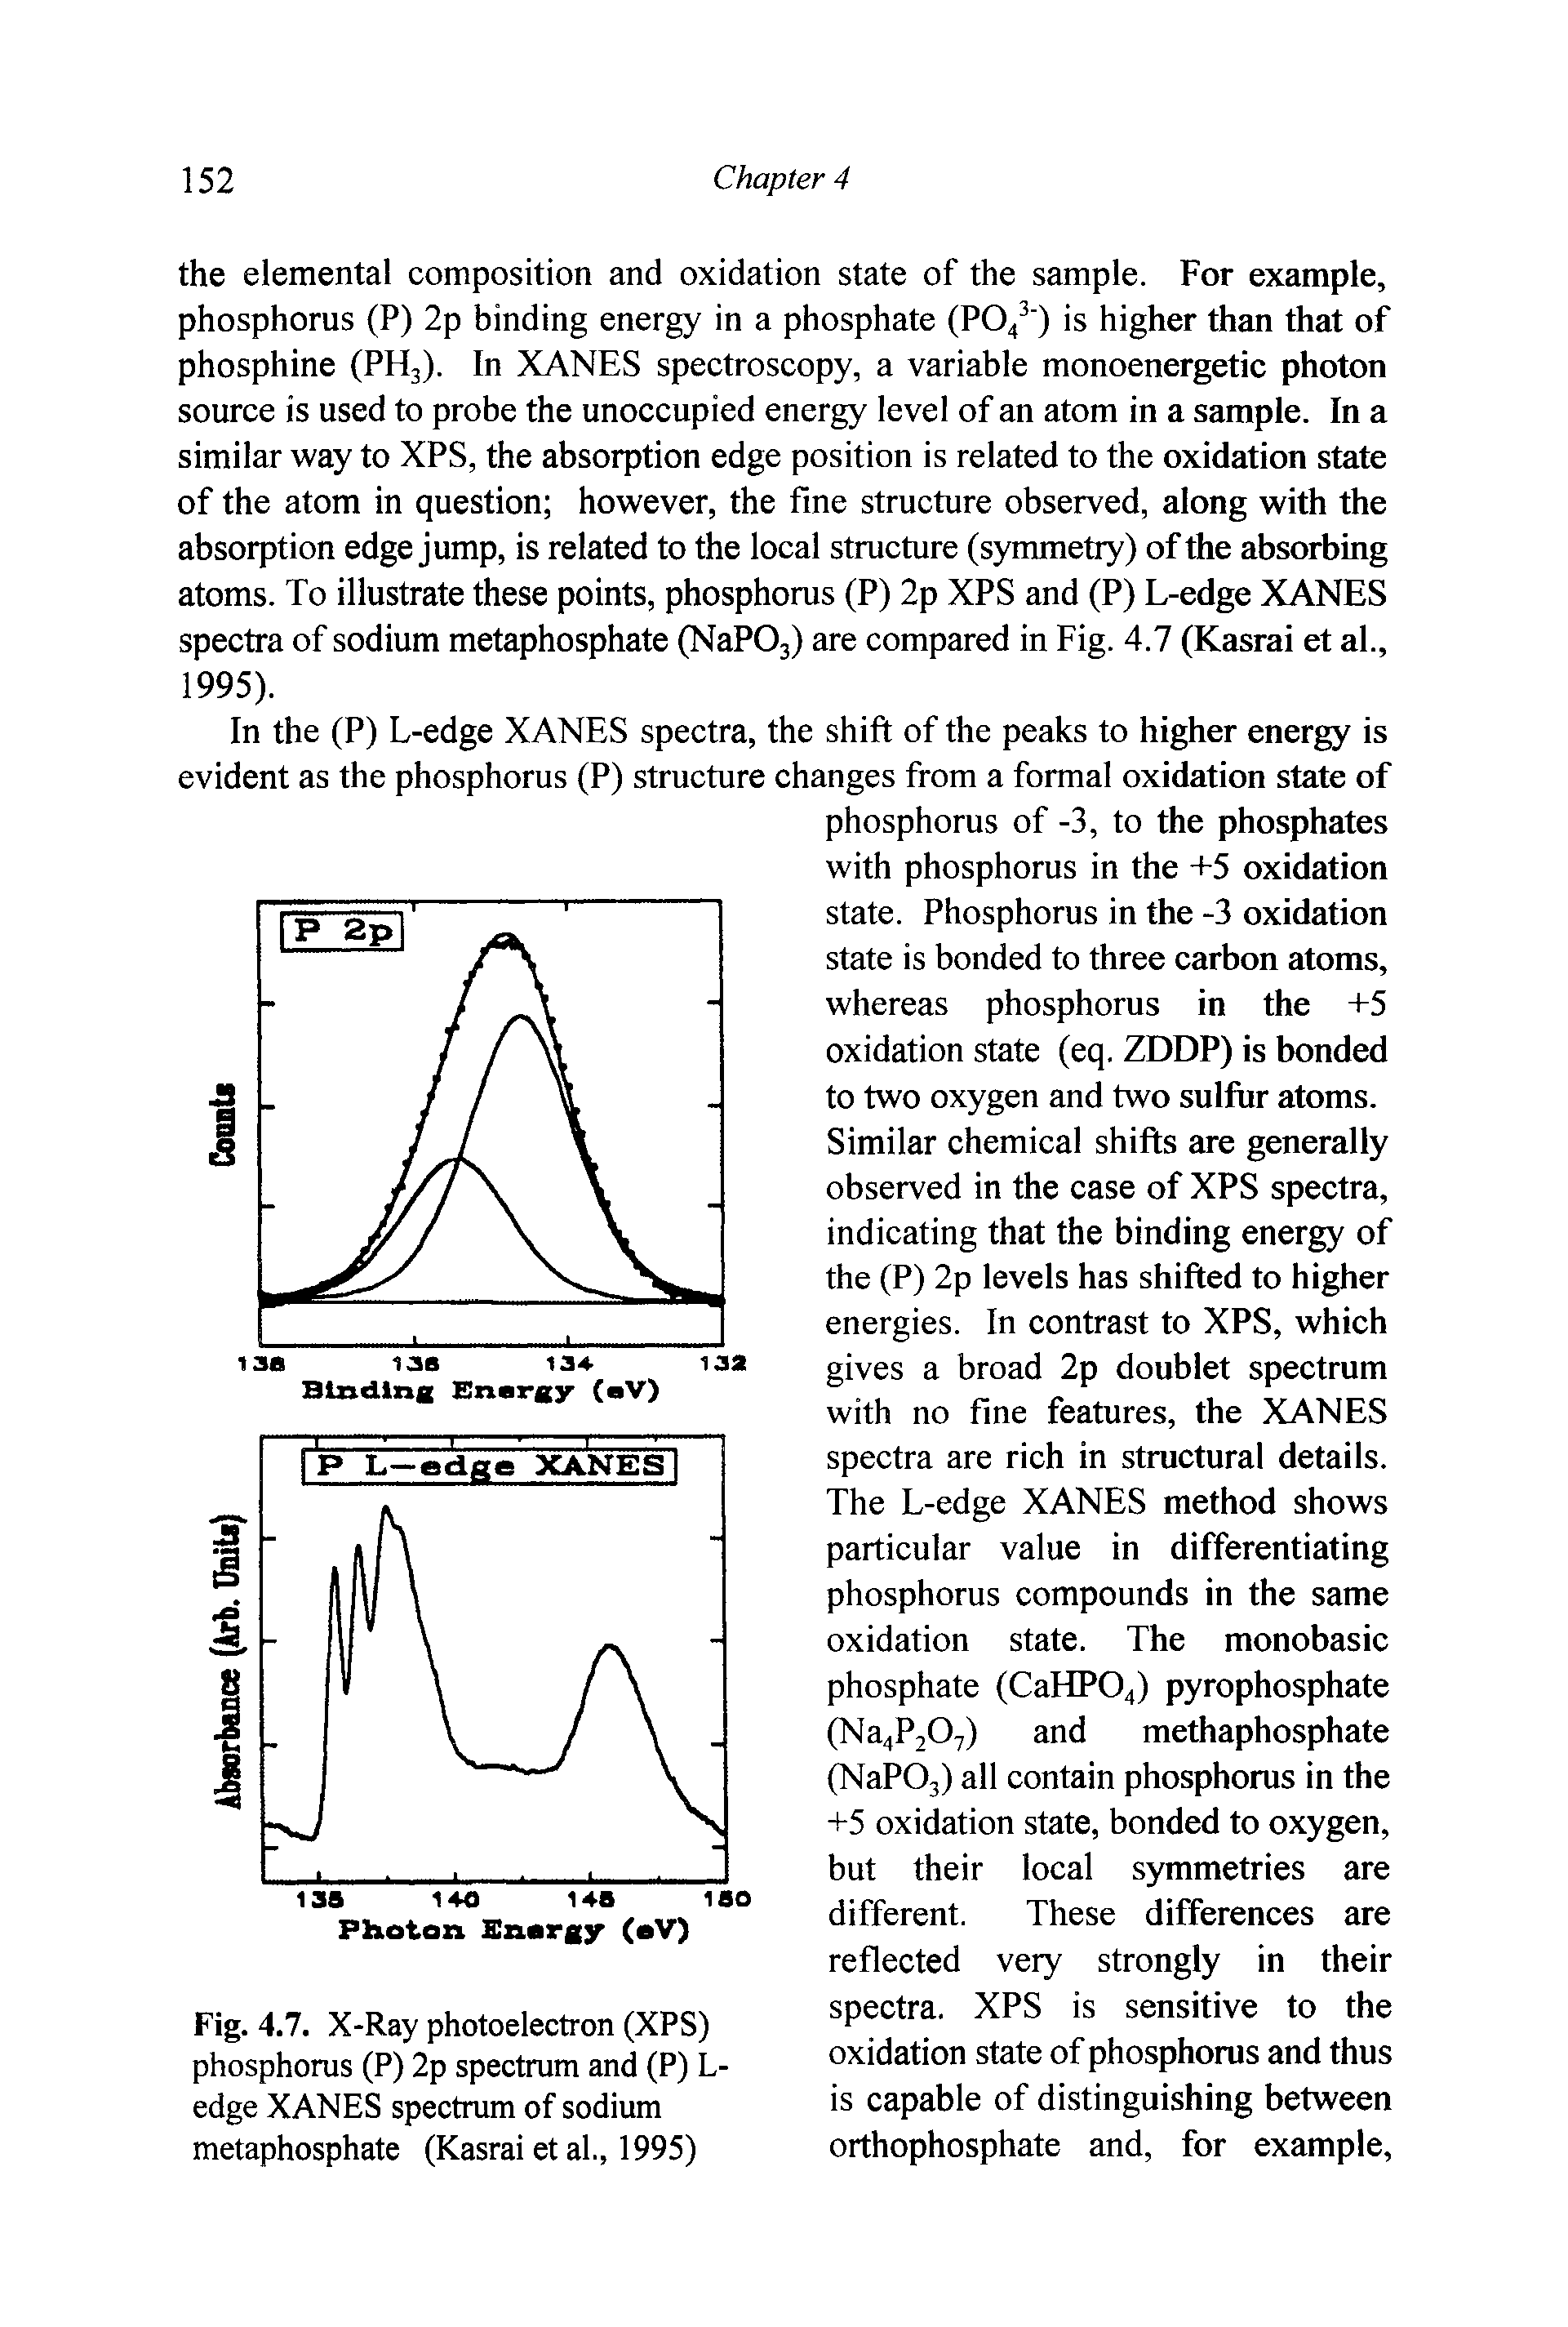 Fig. 4.7. X-Ray photoelectron (XPS) phosphorus (P) 2p spectrum and (P) L-edge XANES spectrum of sodium metaphosphate (Kasrai et al., 1995)...